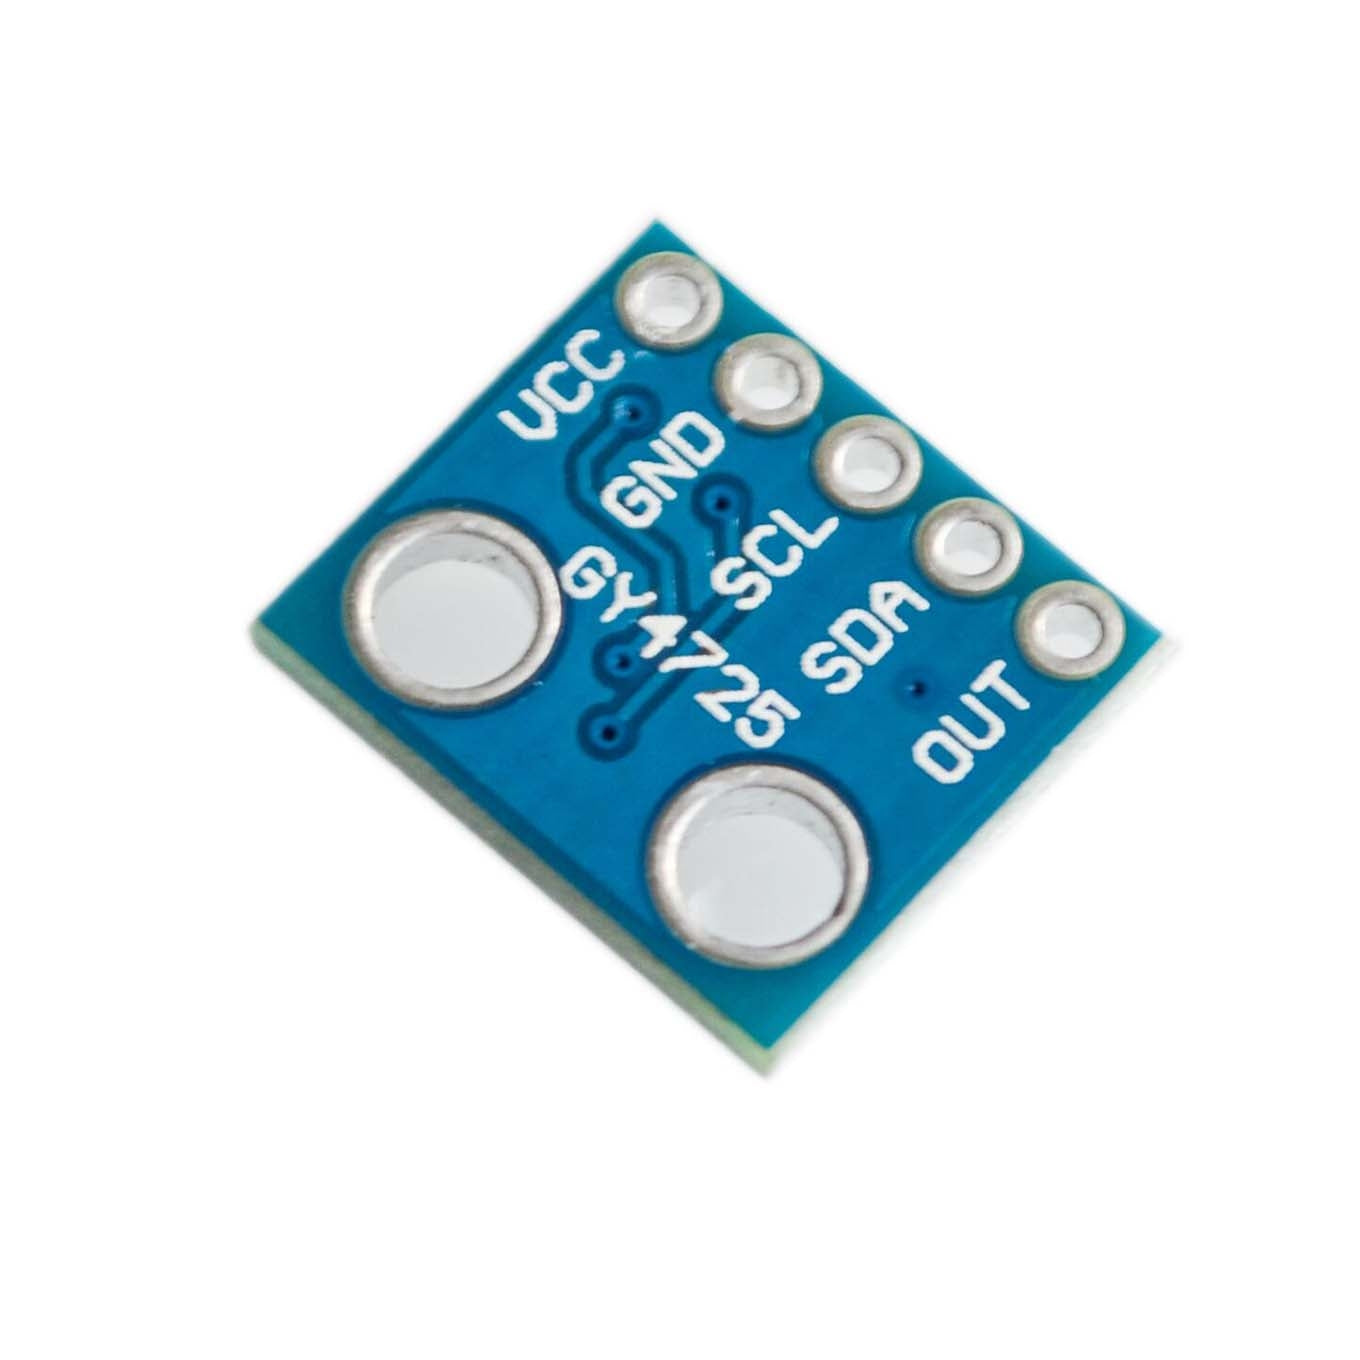 MCP4725 Breakout Board 12-Bit DAC w/I2C Interface